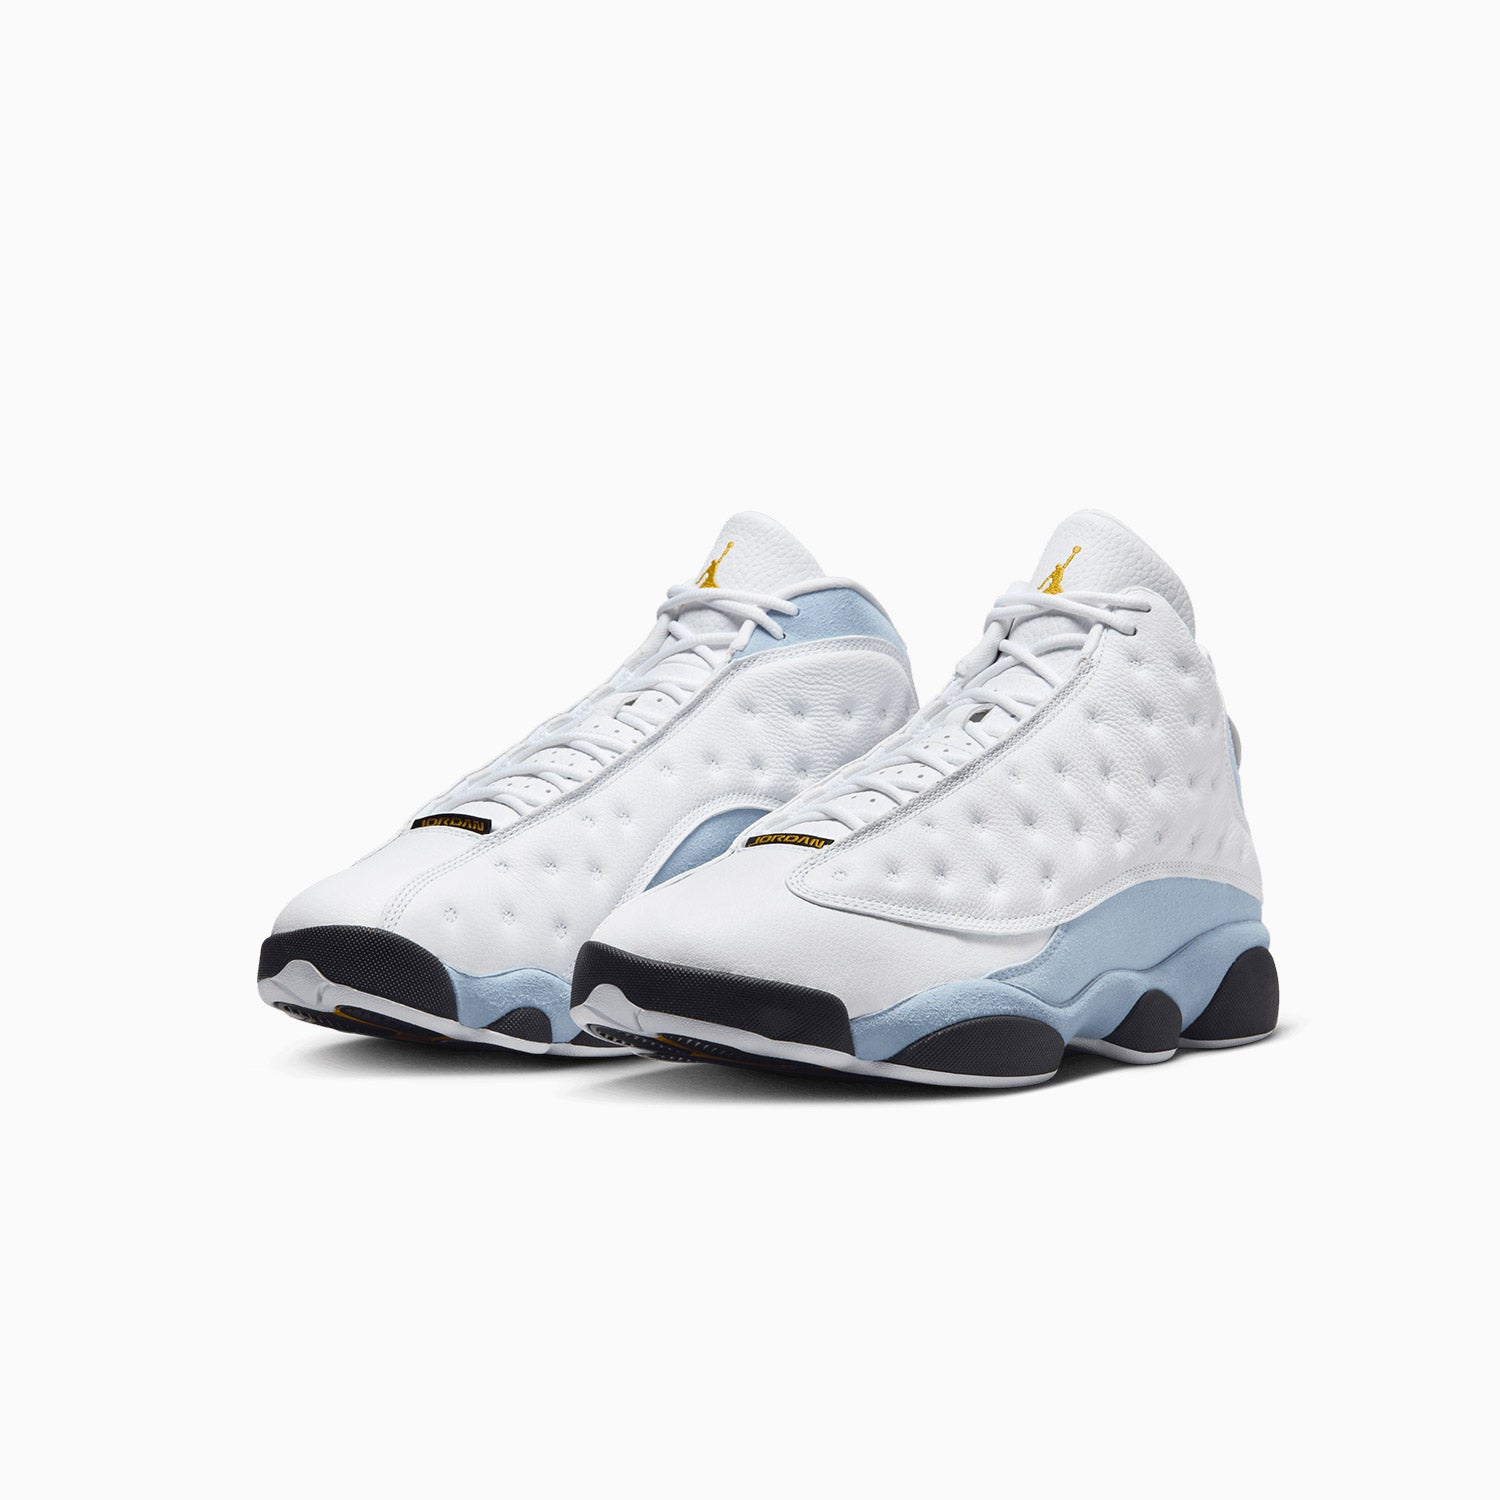 mens-air-jordan-13-retro-blue-grey-shoes-414571-170